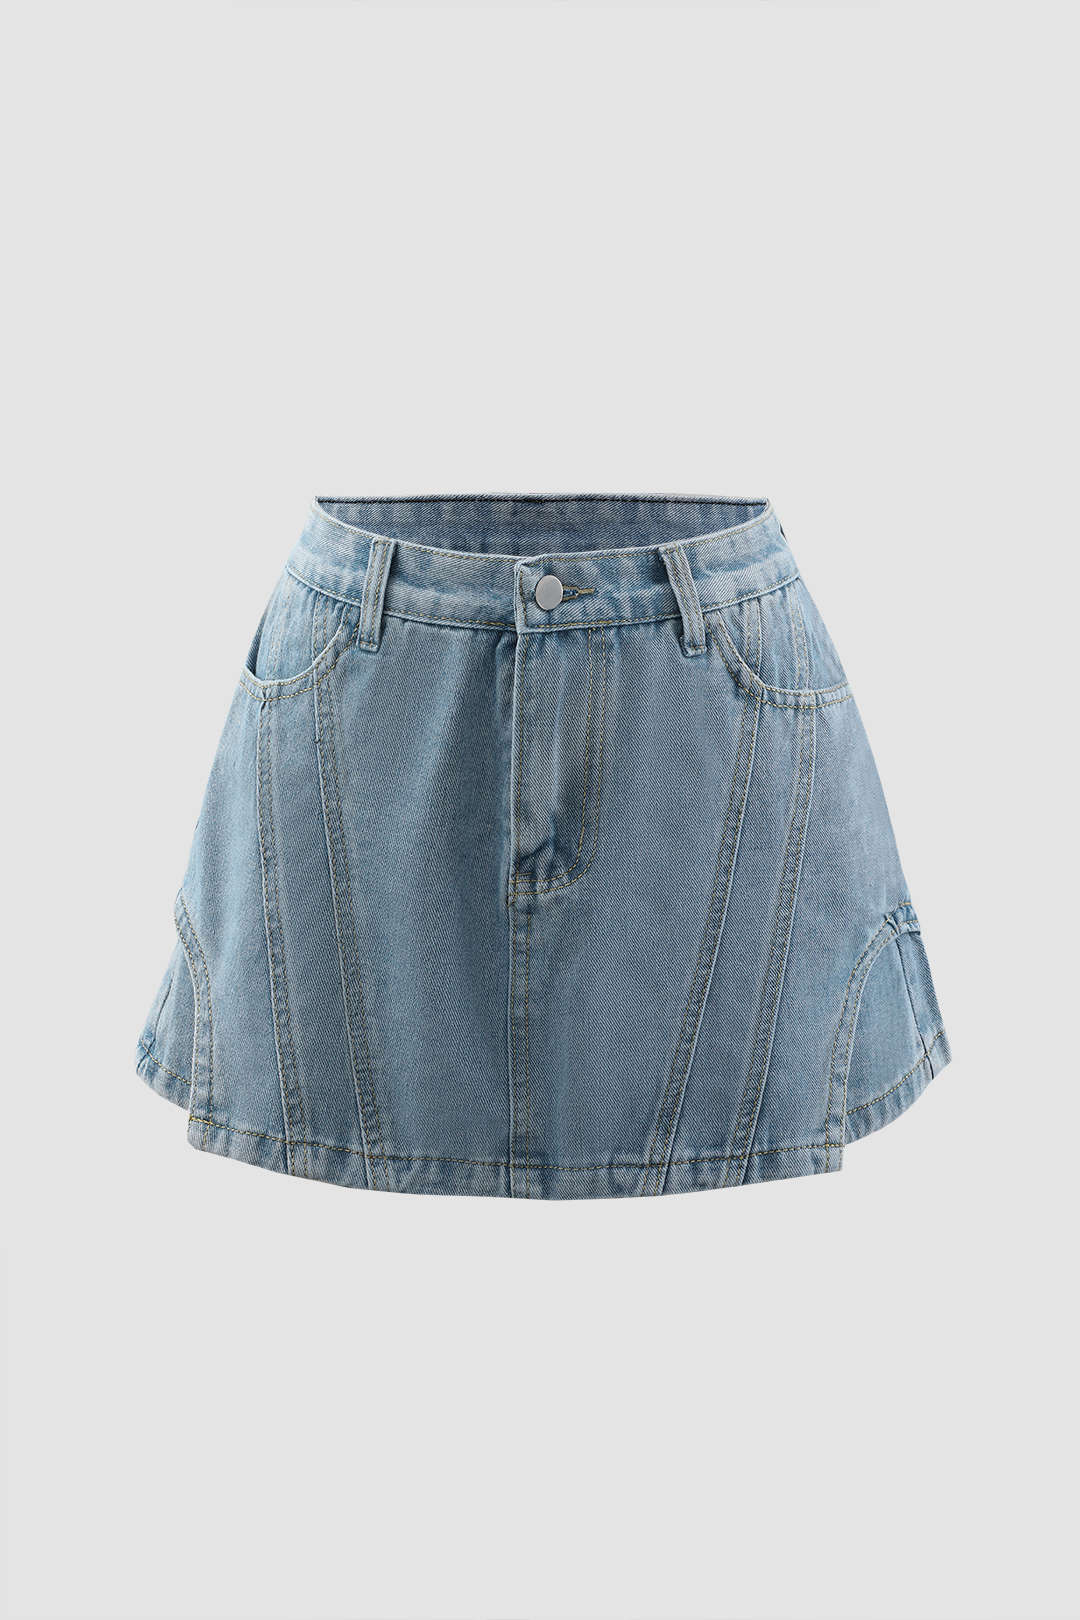 Contrast-Stitch Denim Shorts